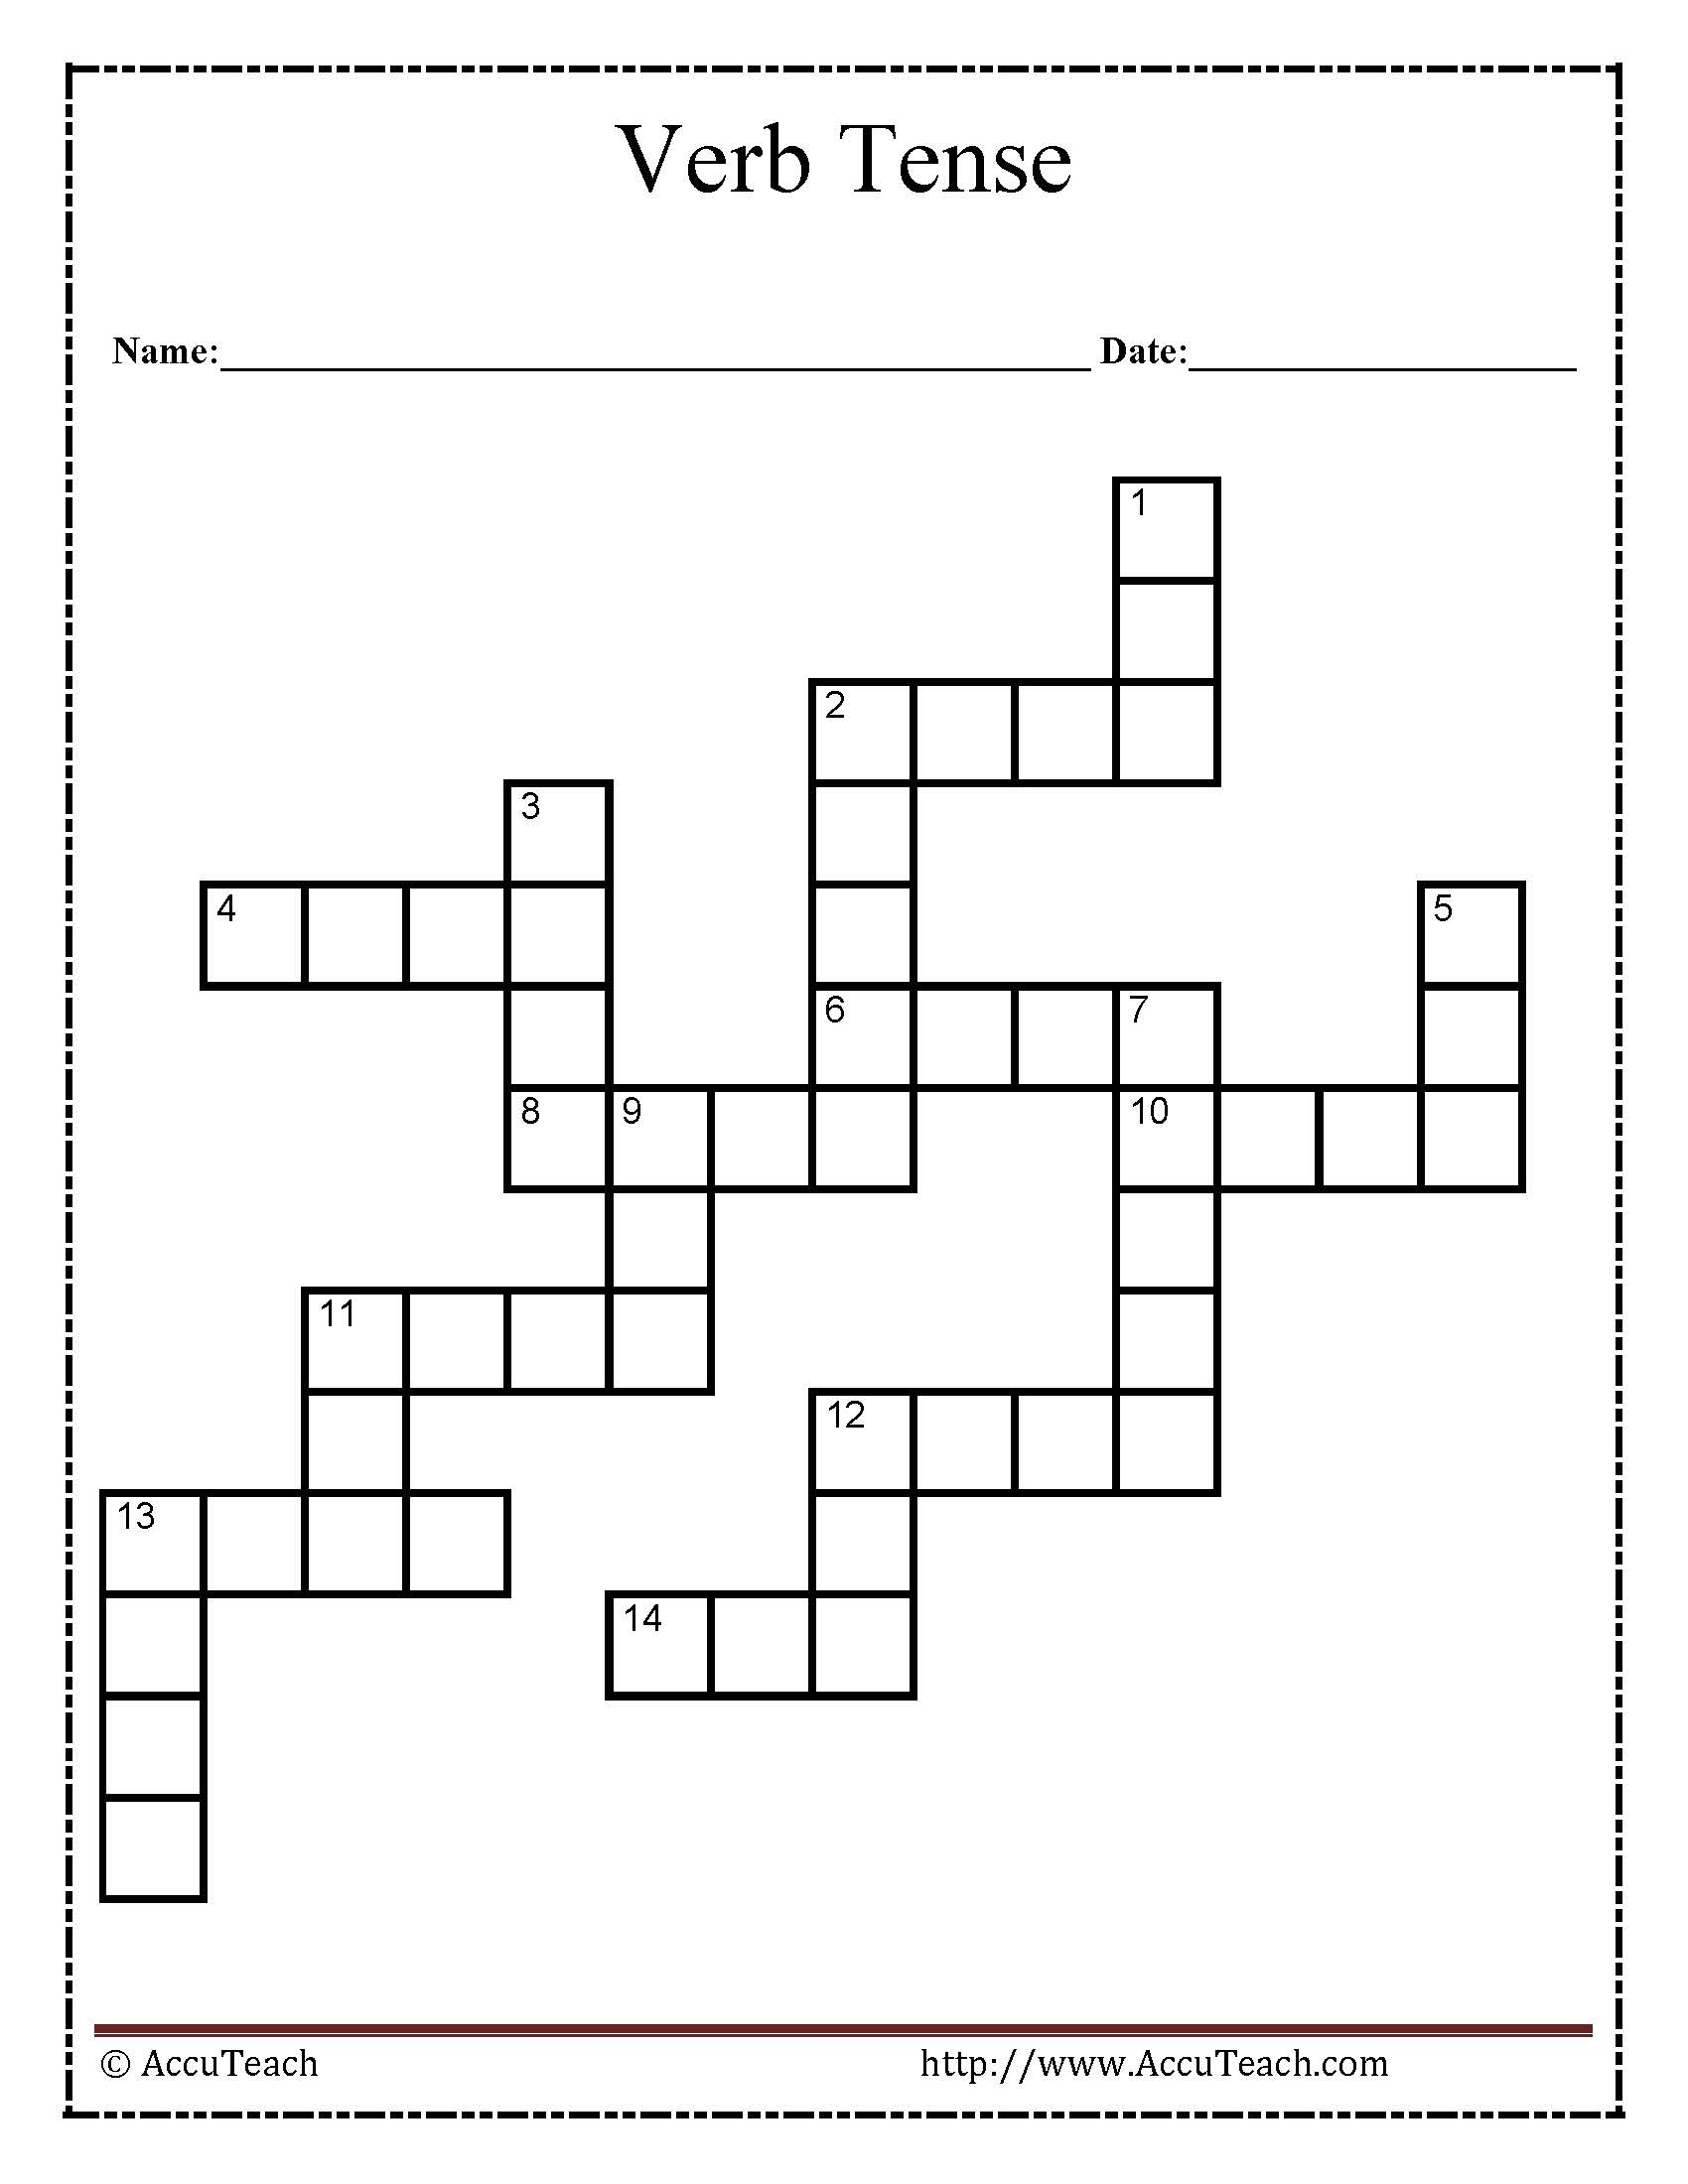 Verb Tense Crossword Puzzle Worksheet - Crossword Puzzles Printable 6Th Grade